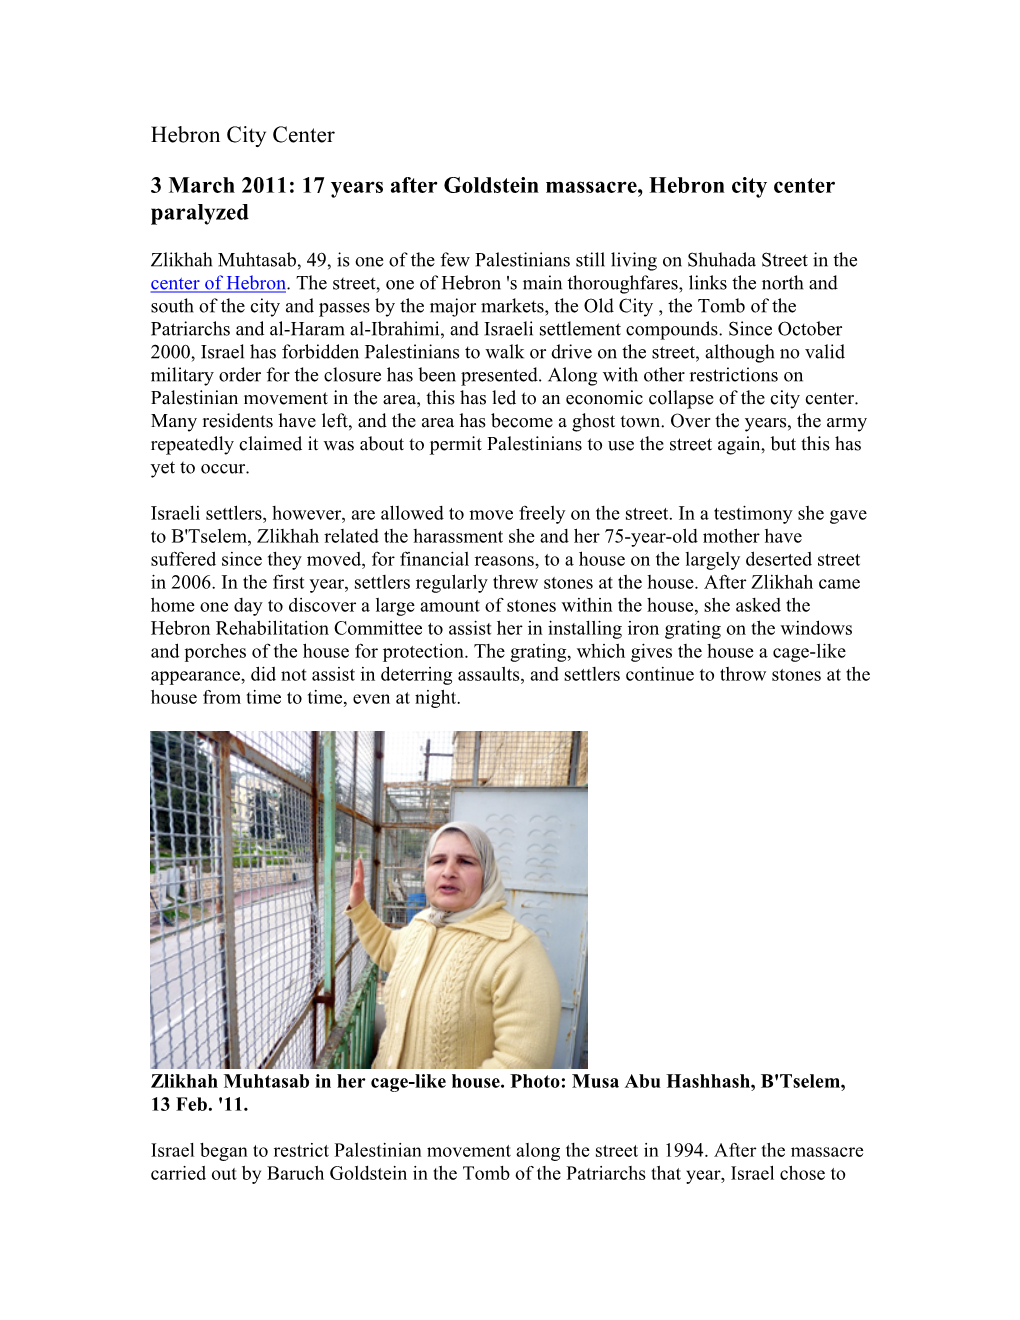 Hebron City Center 3 March 2011: 17 Years After Goldstein Massacre